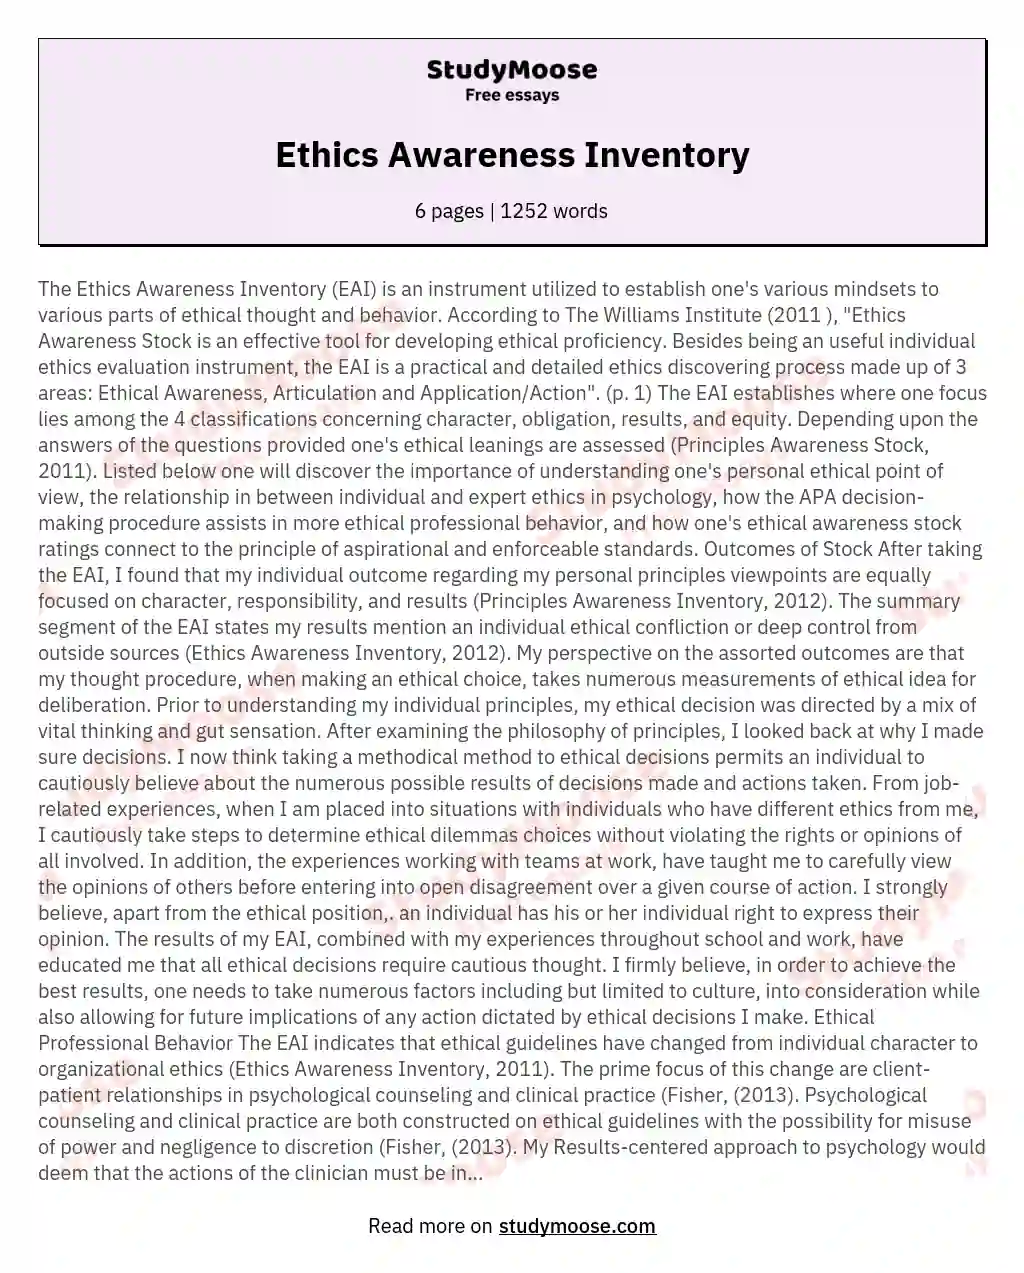 Ethics Awareness Inventory essay